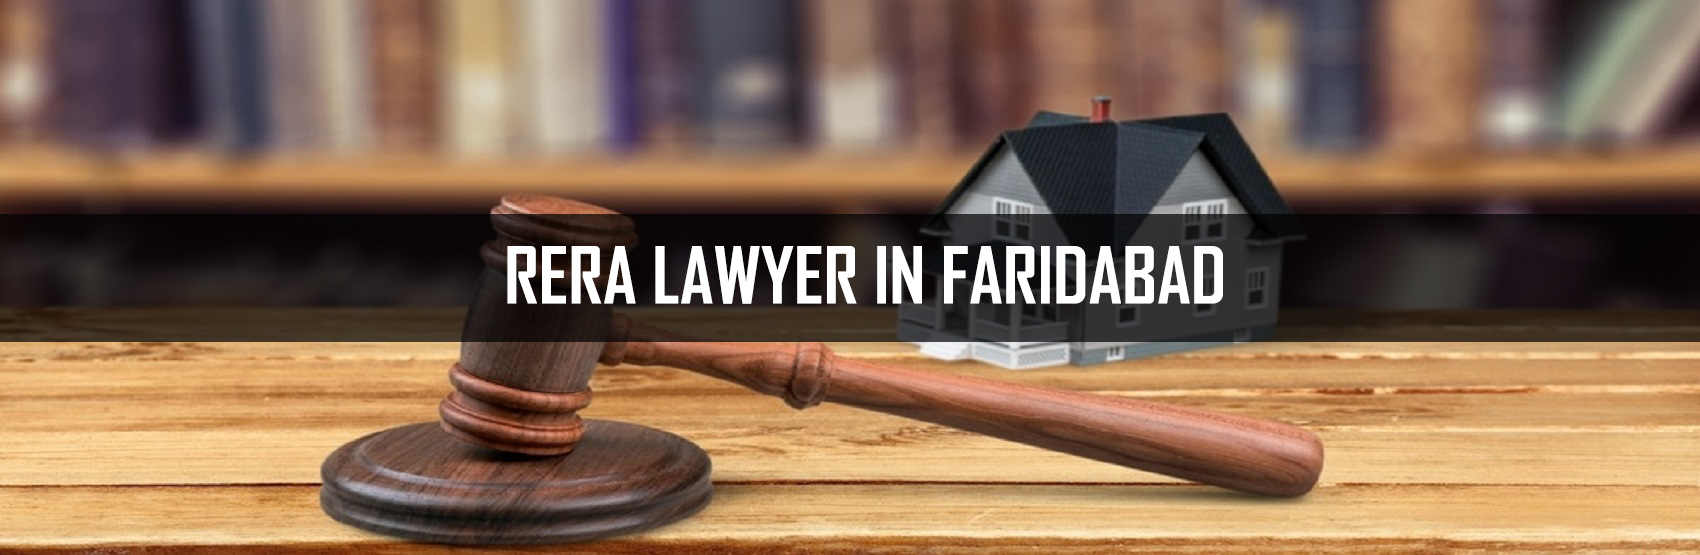 Rera Lawyer in Faridabad